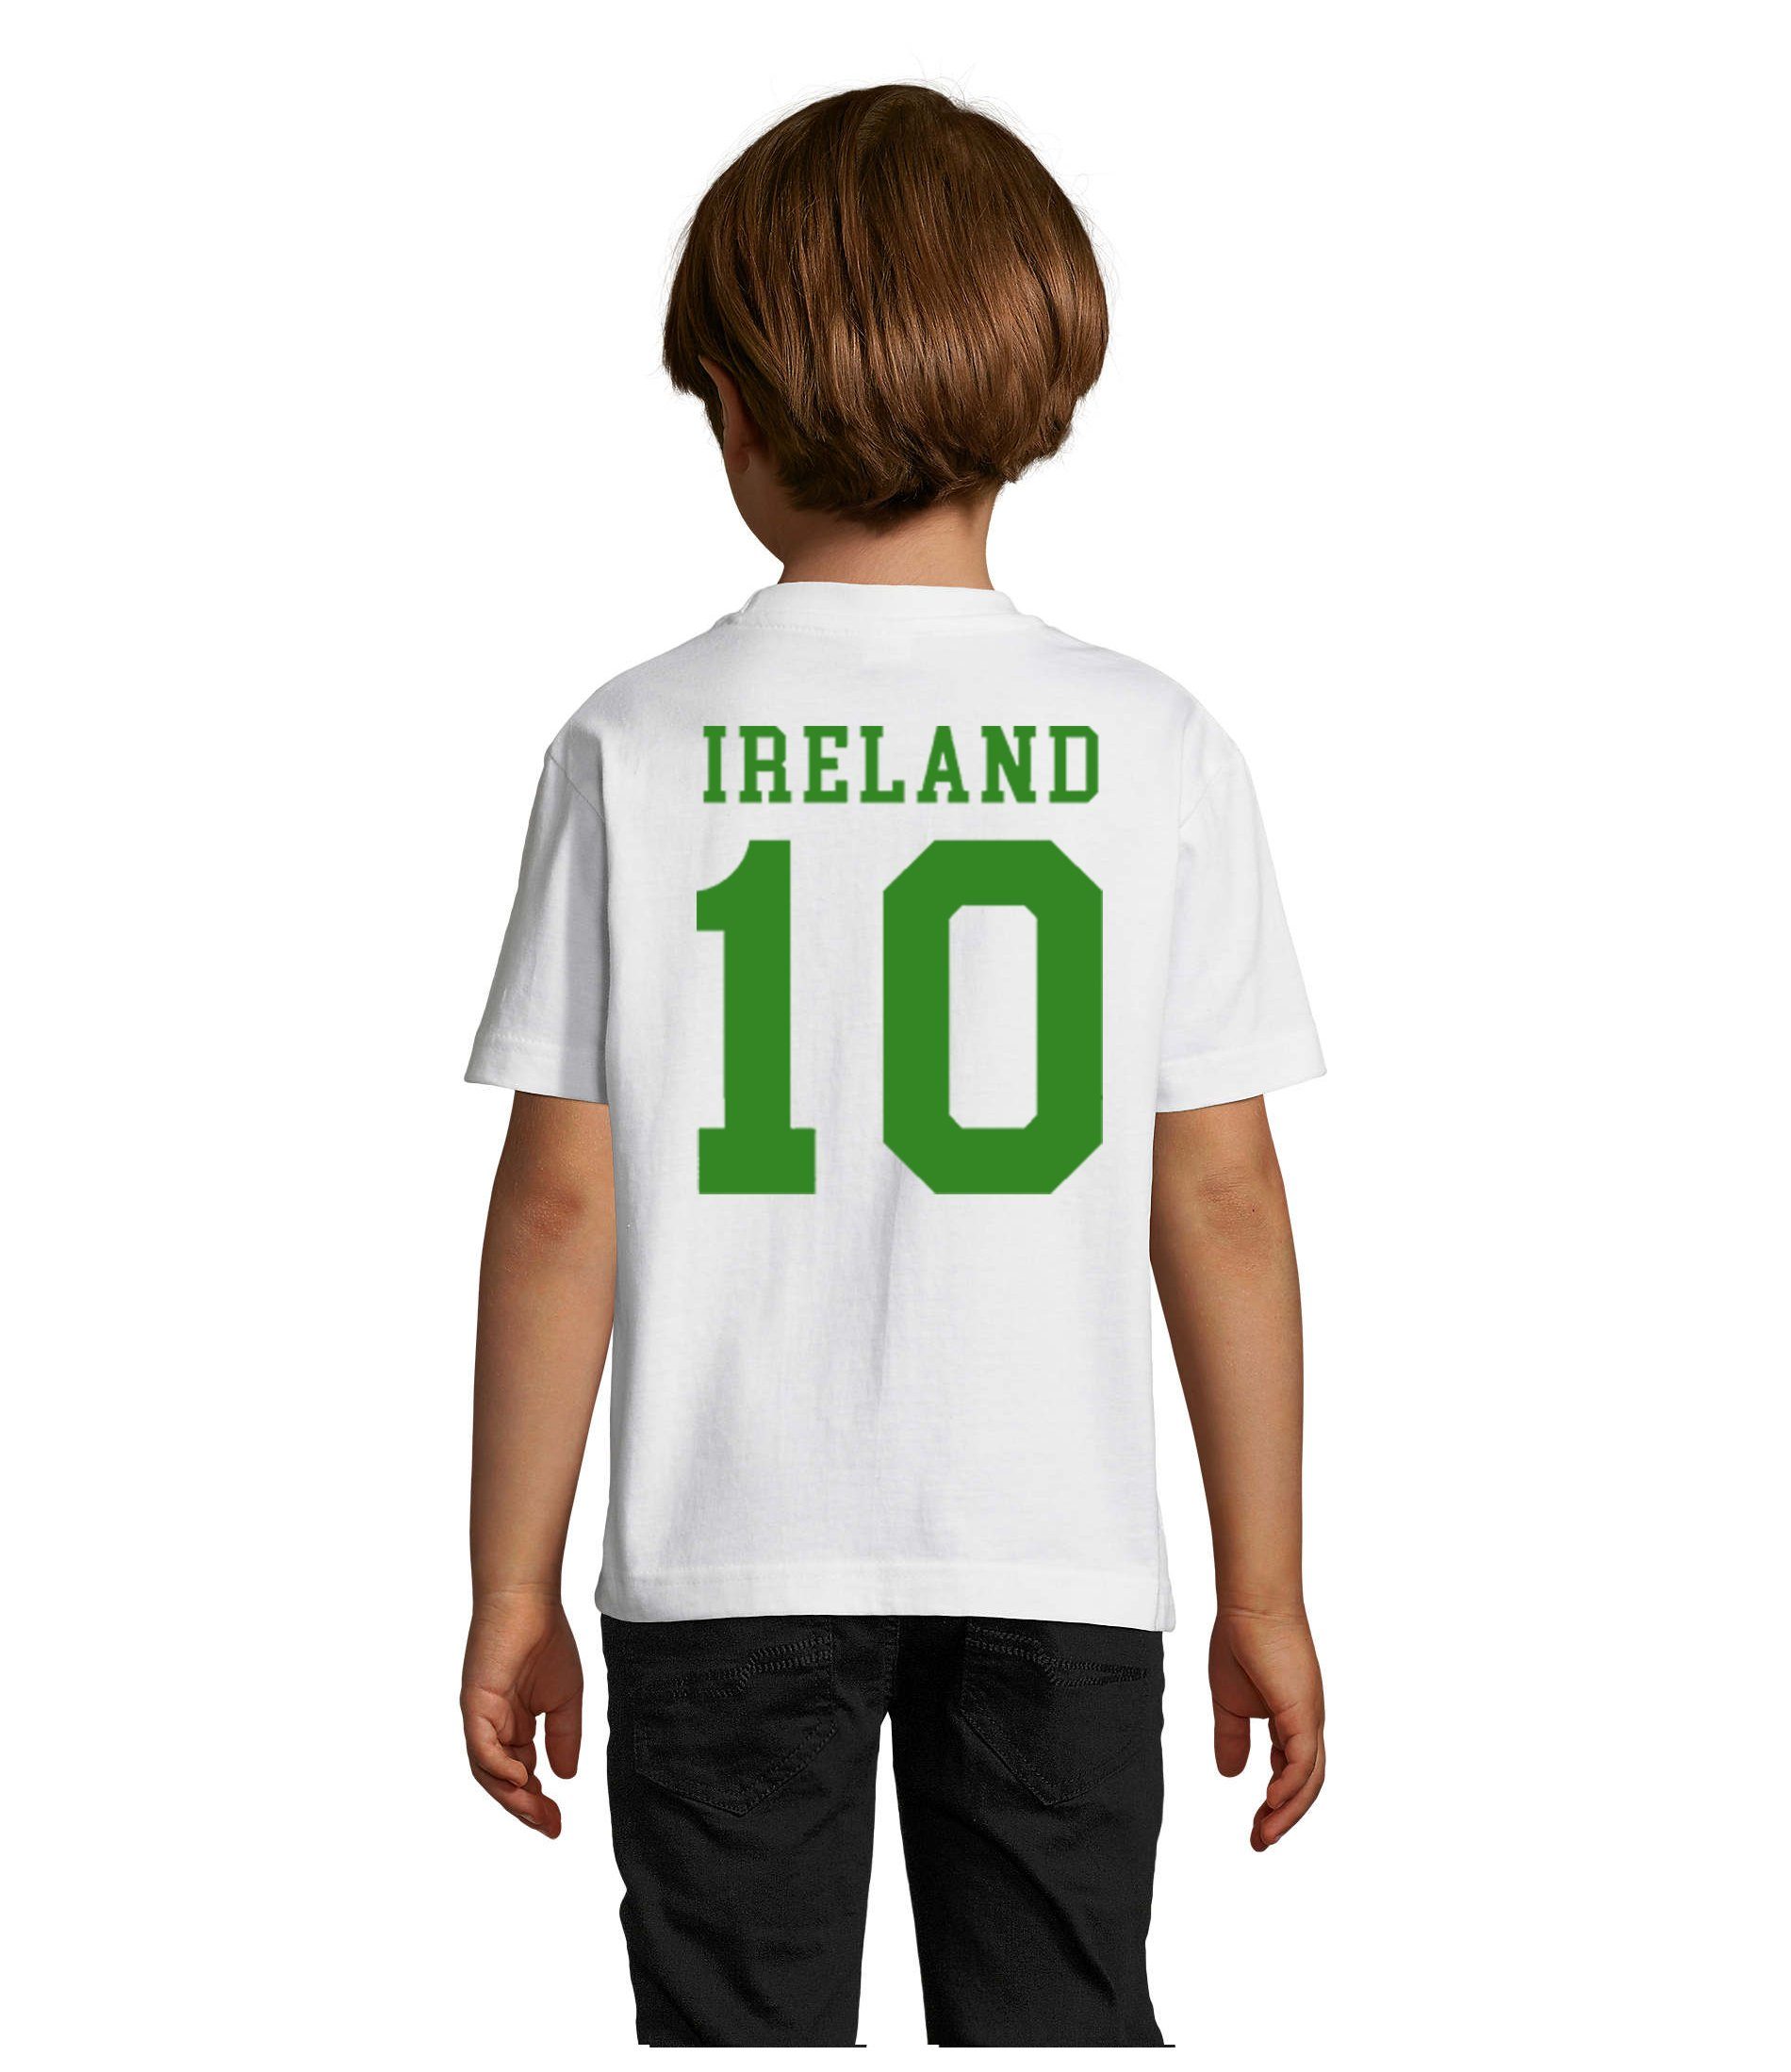 Blondie & Brownie Fußball WM Handball Irland EM Grün/Weiss Sport T-Shirt Trikot Kinder Weltmeister